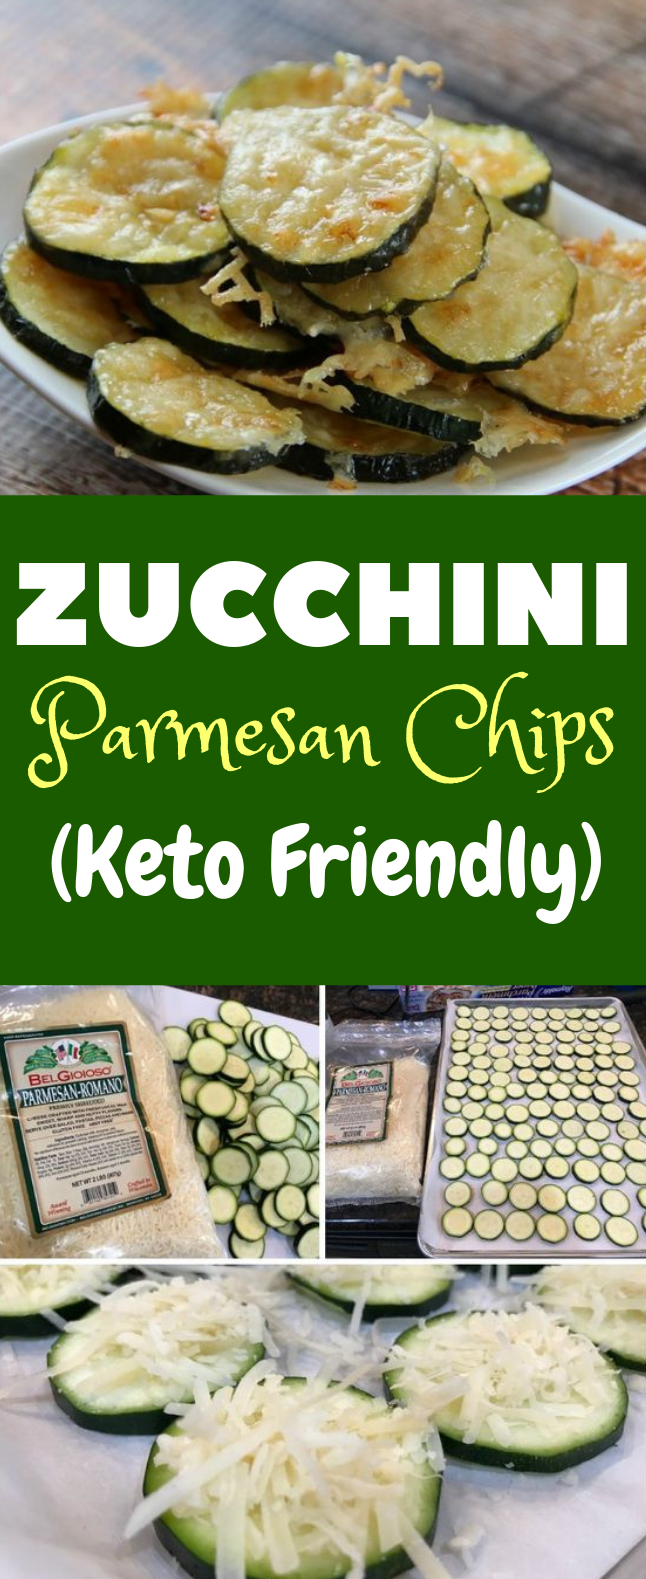 Low Carb Zucchini Parmesan Chips – Keto Friendly Recipe #Keto #DietRecipe